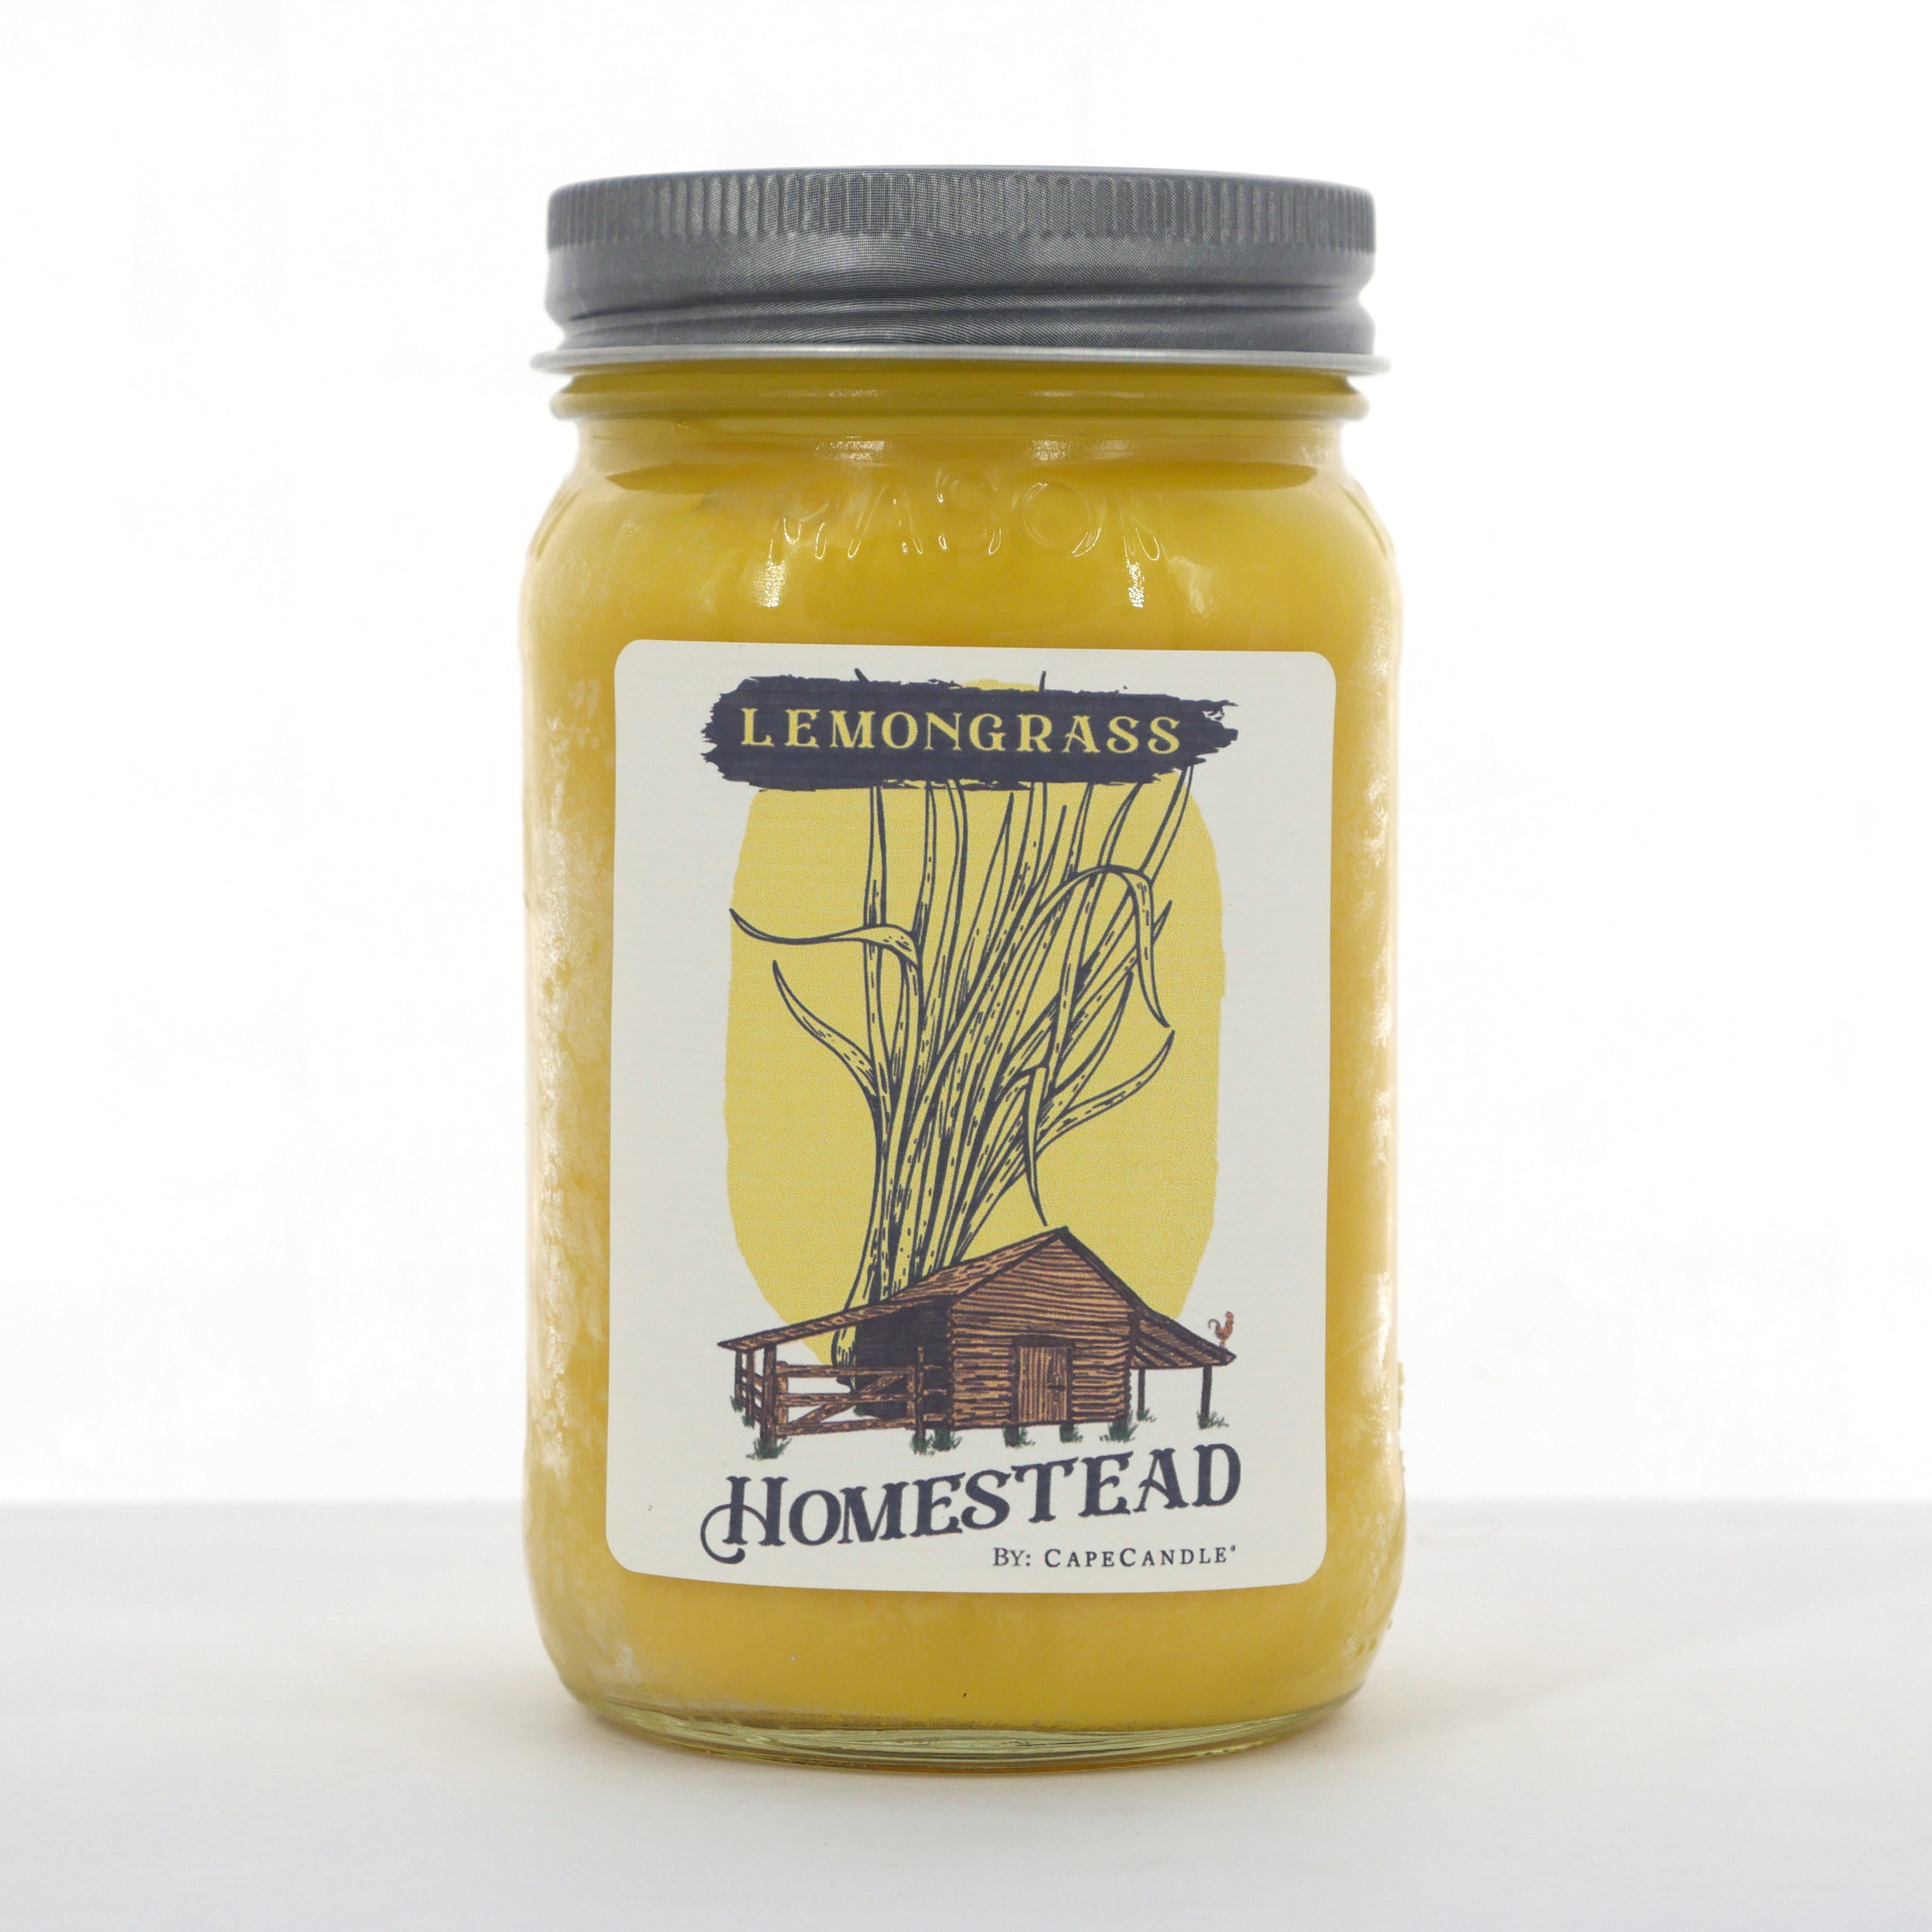 Lemongrass Soy Candle 16oz Homestead Mason Jar by Cape Candle